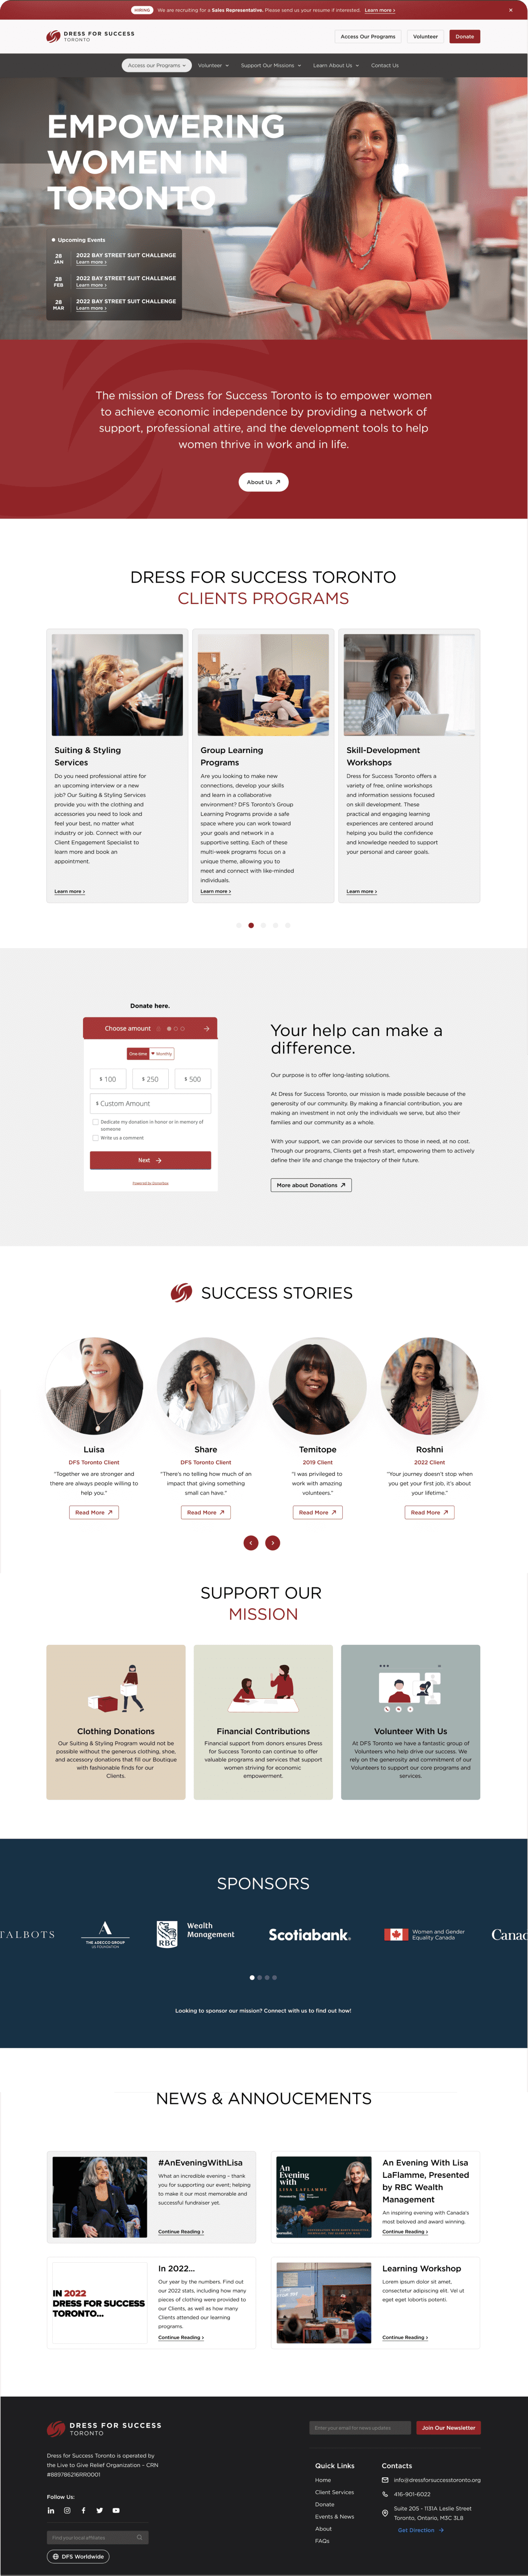 Brand Vision Marketing Designs Sophisticated Website for Dress For Success.